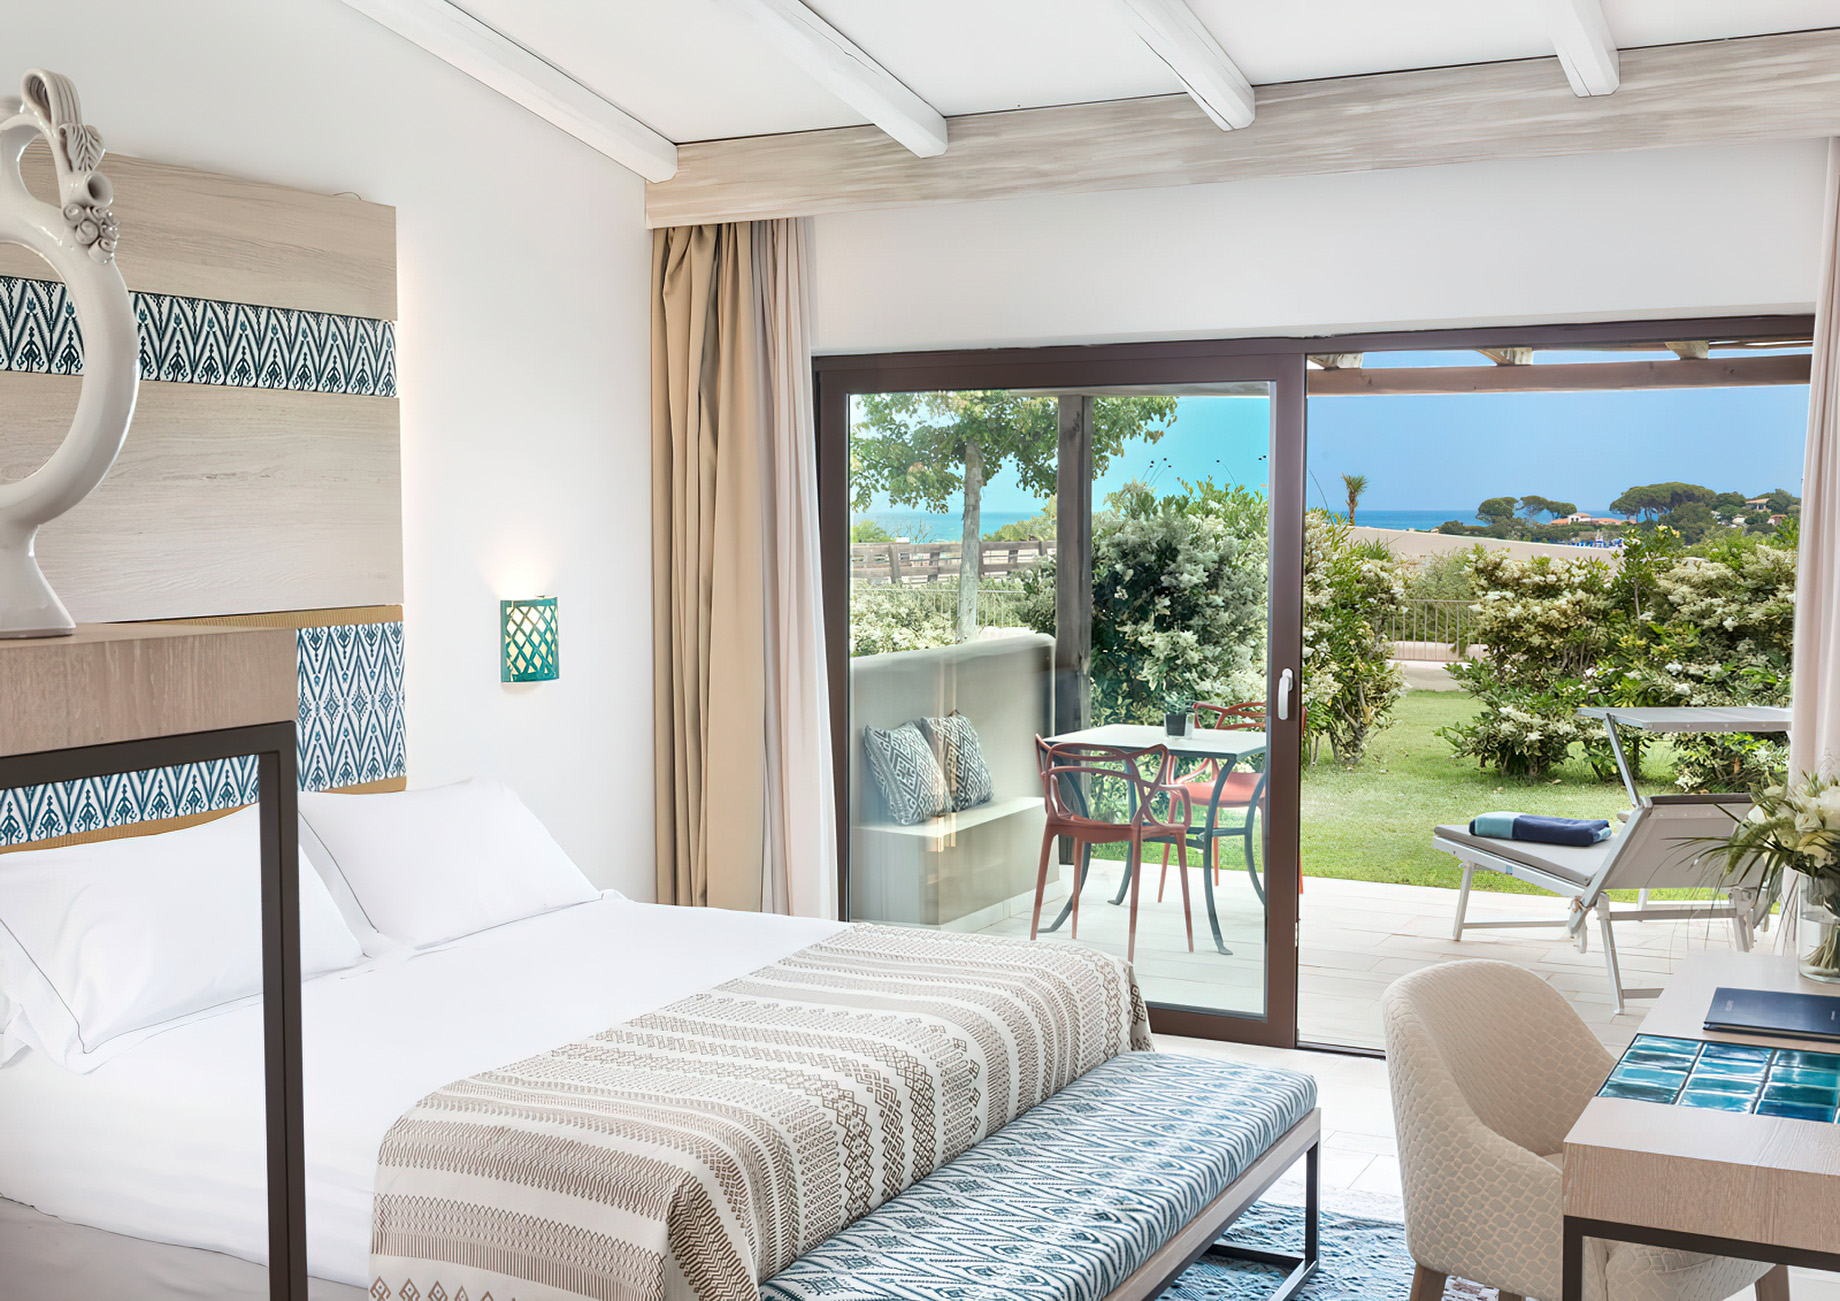 Baglioni Resort Sardinia – San Teodoro, Sardegna, Italy – Grand Deluxe Sea View Room